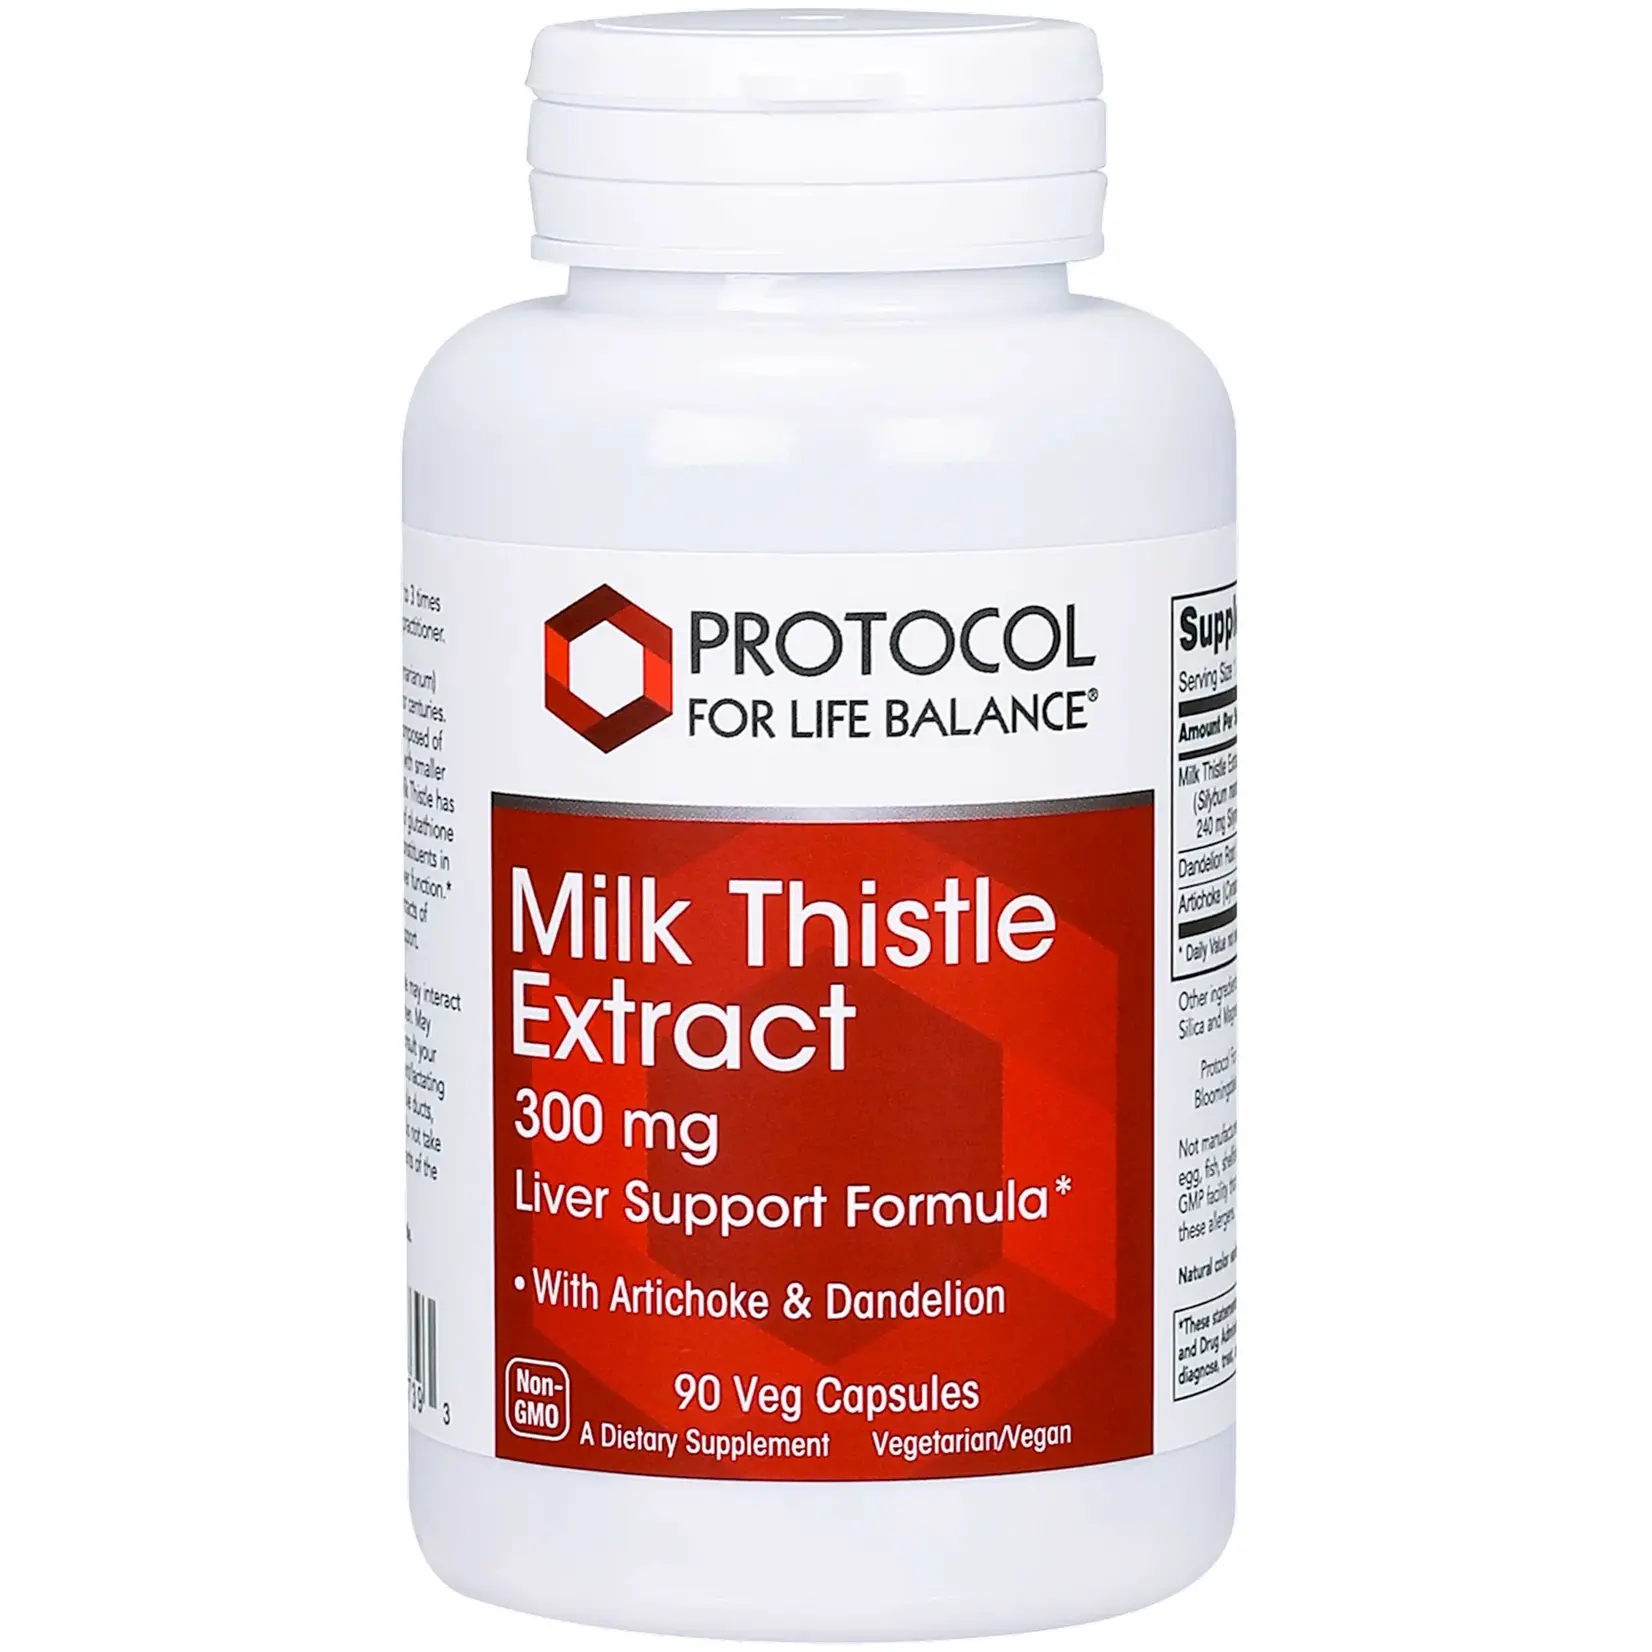 Milk Thistle Extract  (Protocol for Life Balance)